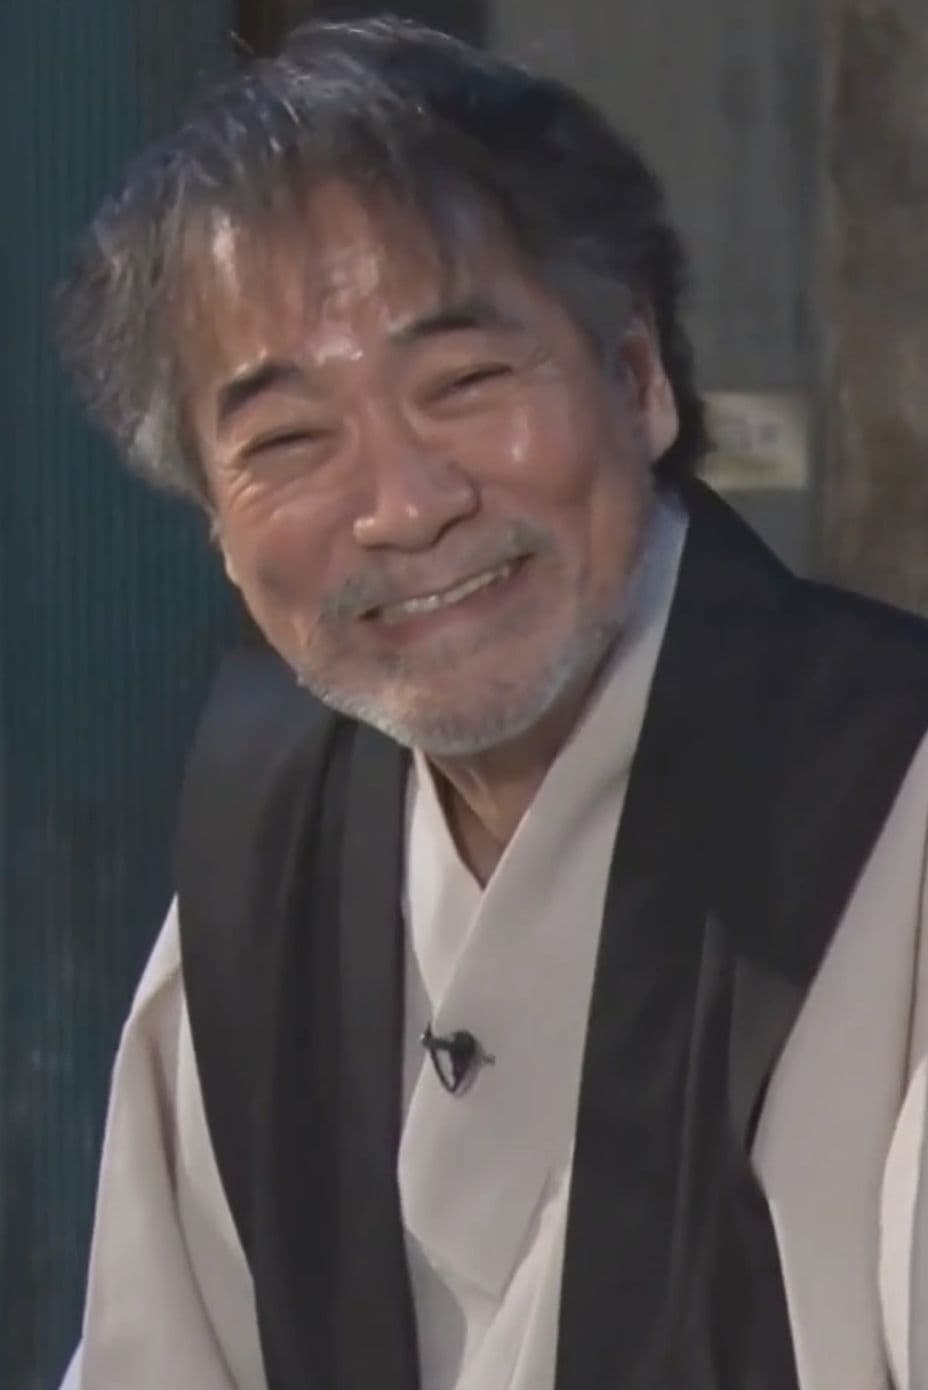 Junji Inagawa